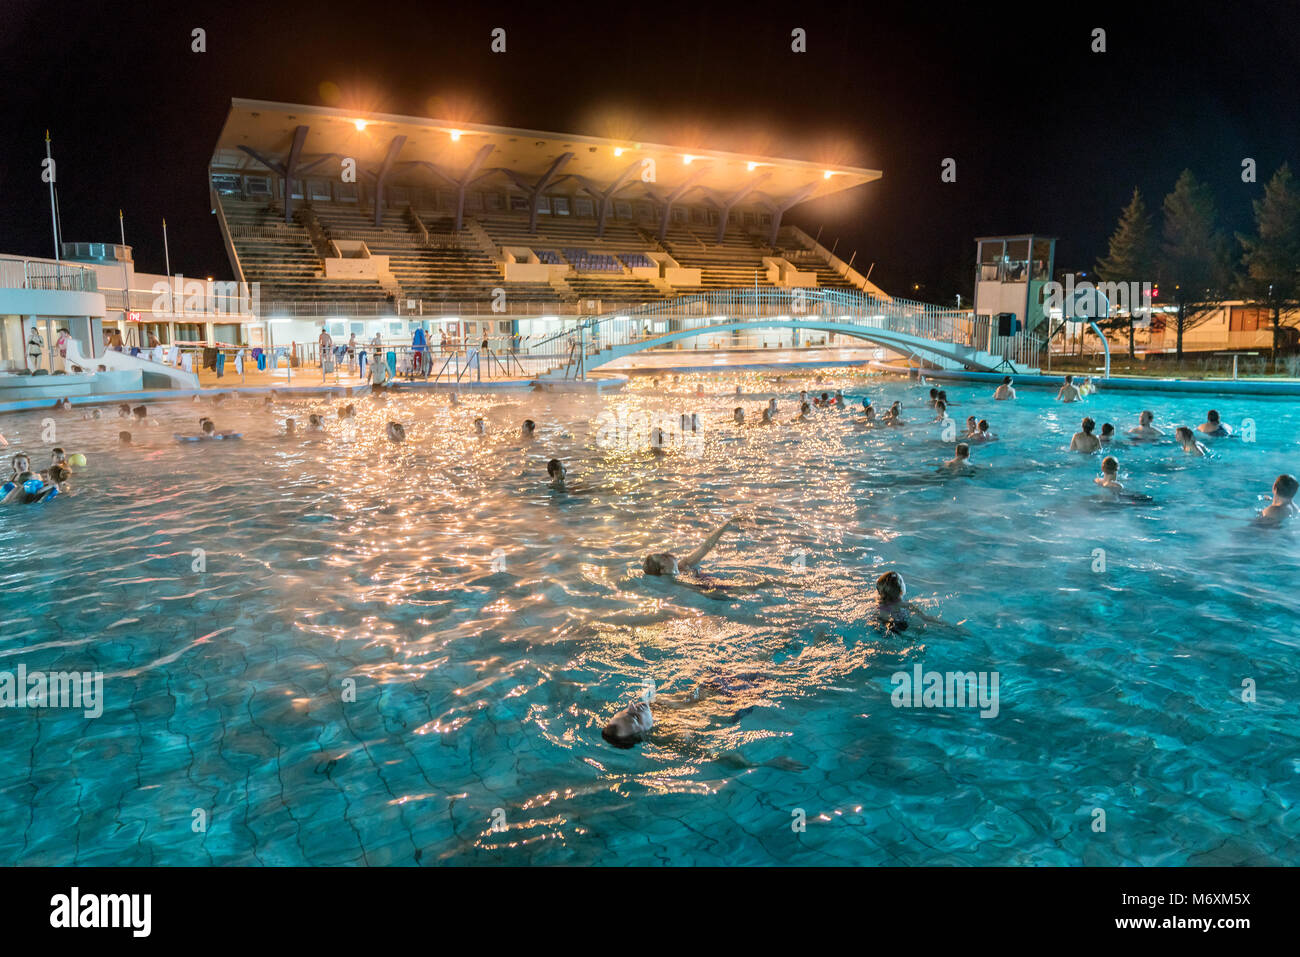 People enjoying the swimming pool, Reykjavik, Iceland Stock Photo